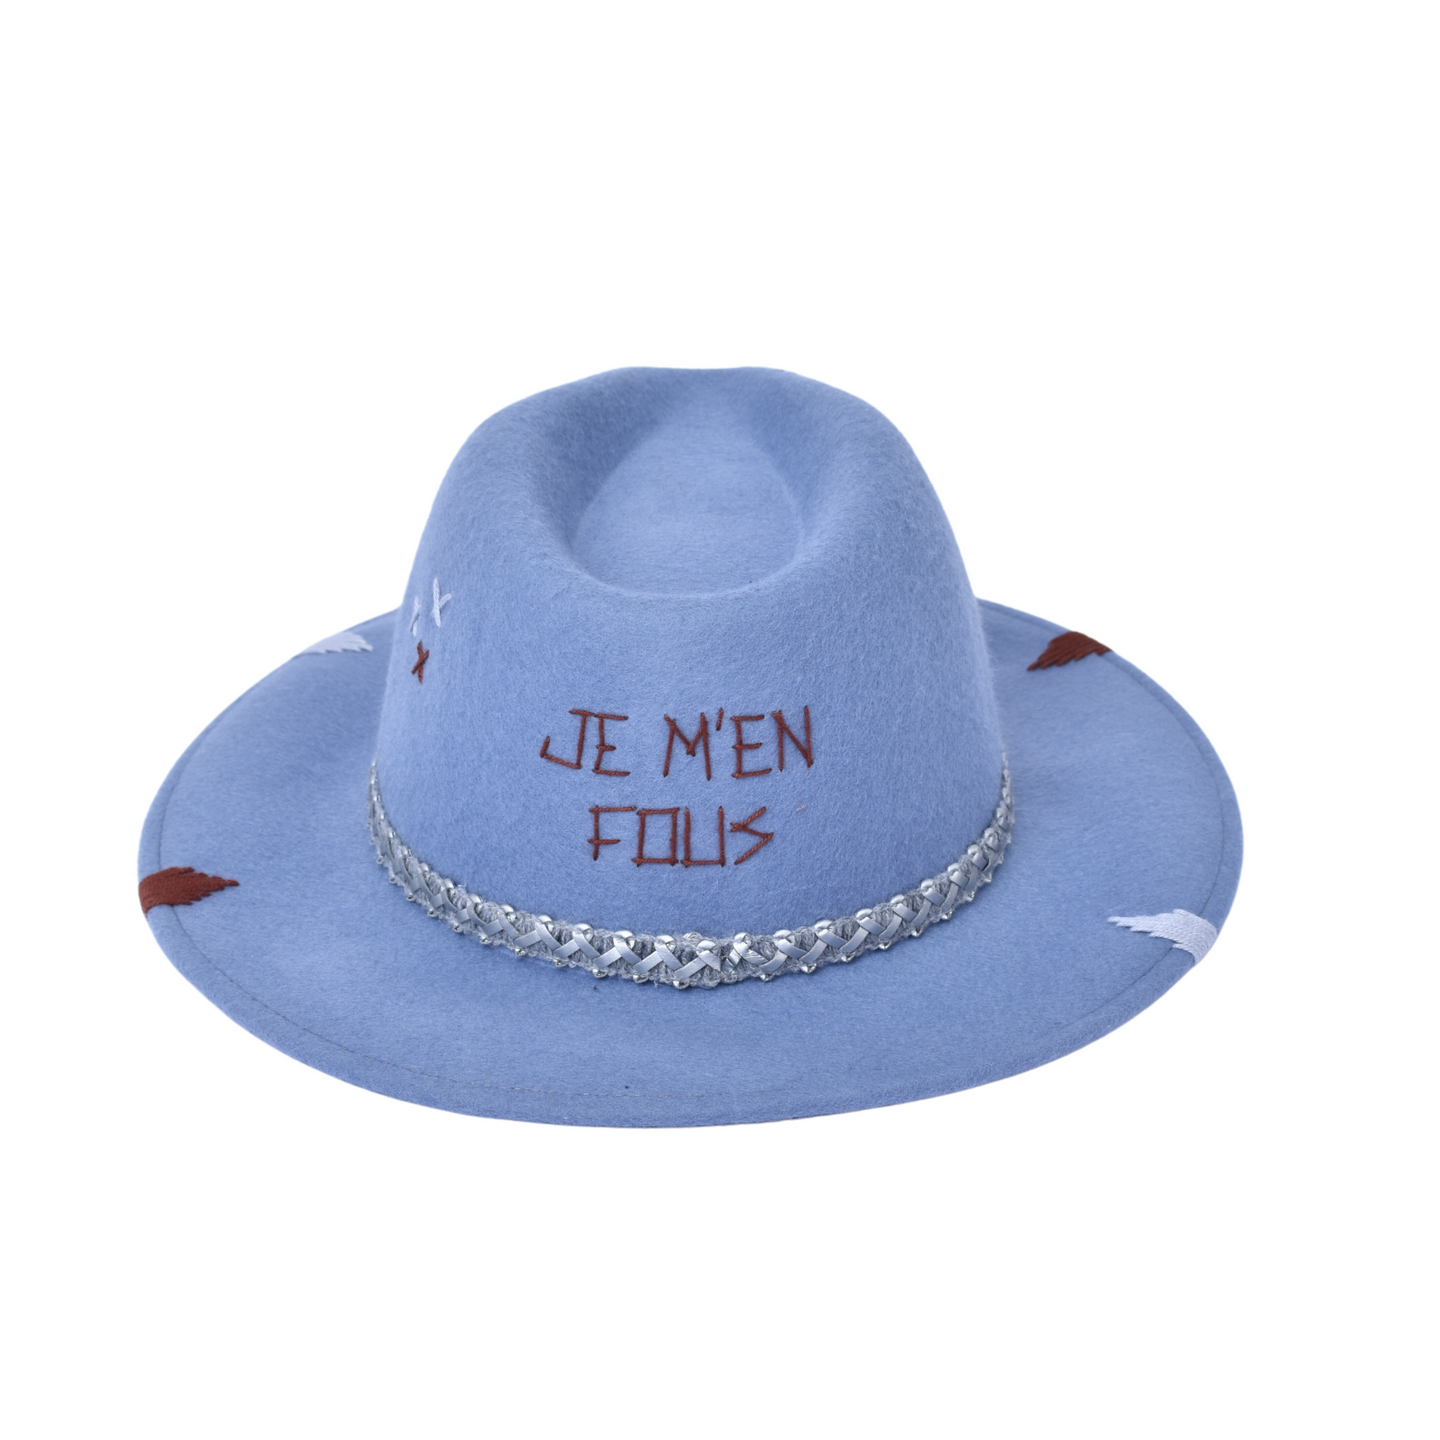 Denim hat - JE MEN FOUS